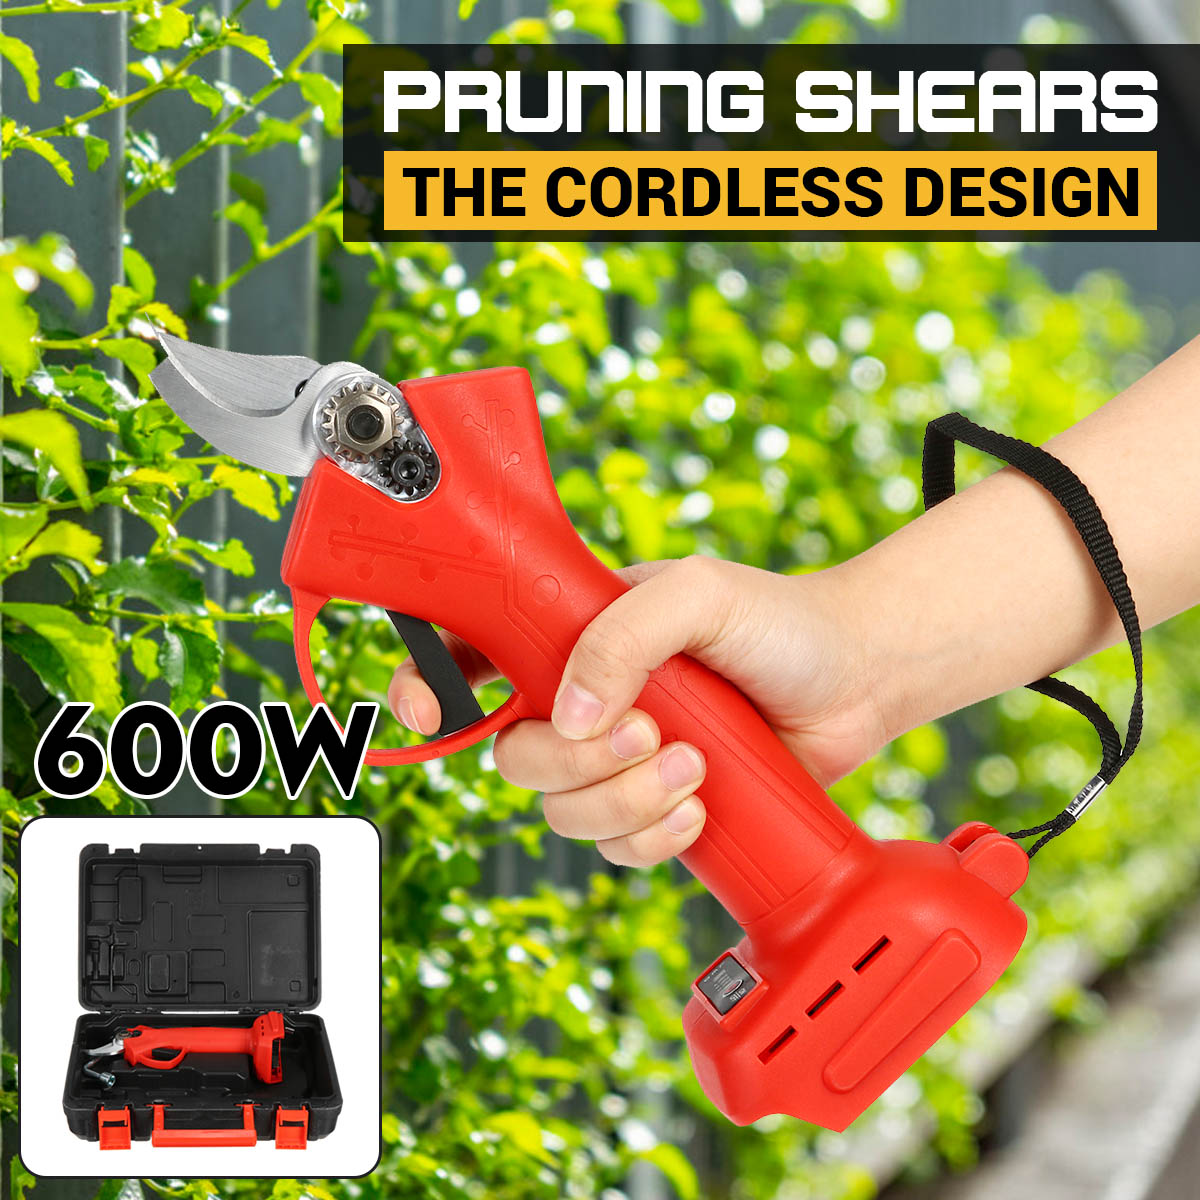 600W-30mm-Electric-Garden-Pruning-Pruner-Shears-18V-Cordless-Secateur-Branch-Cutter-Pruning-Shears-A-1712799-4